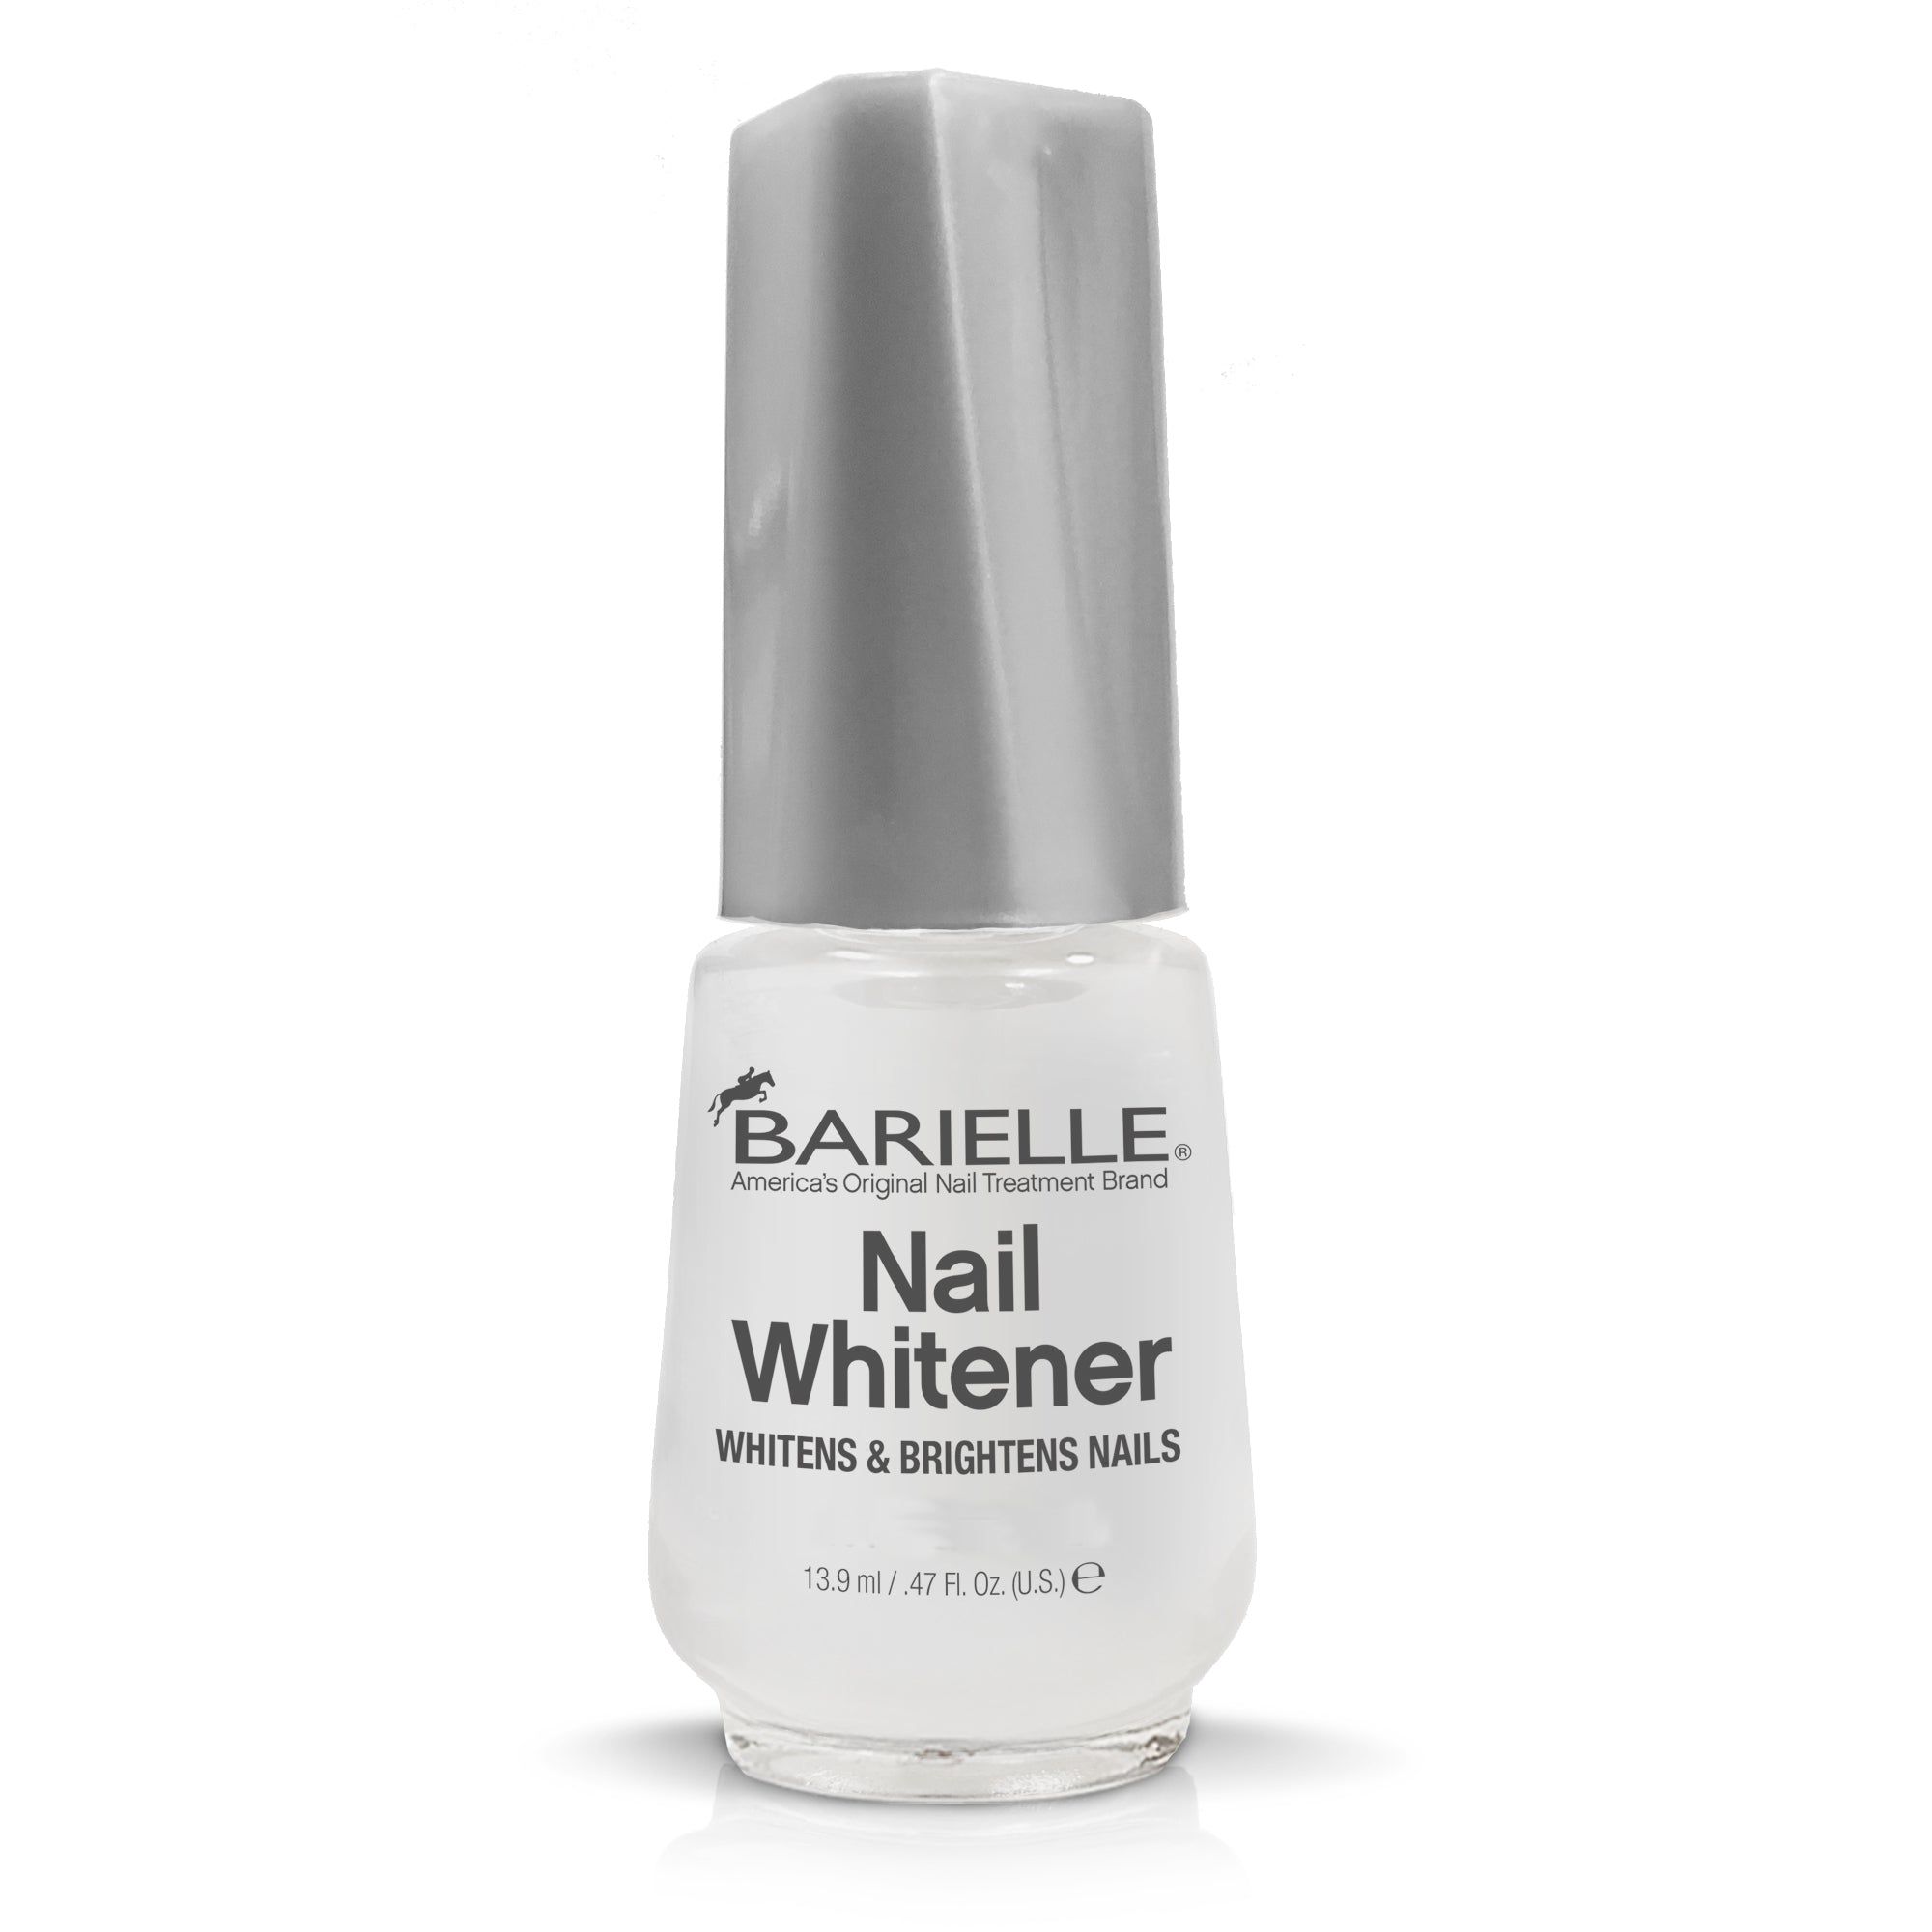  Nail Whitening - 1 Star & Up / Nail Whitening / Nail